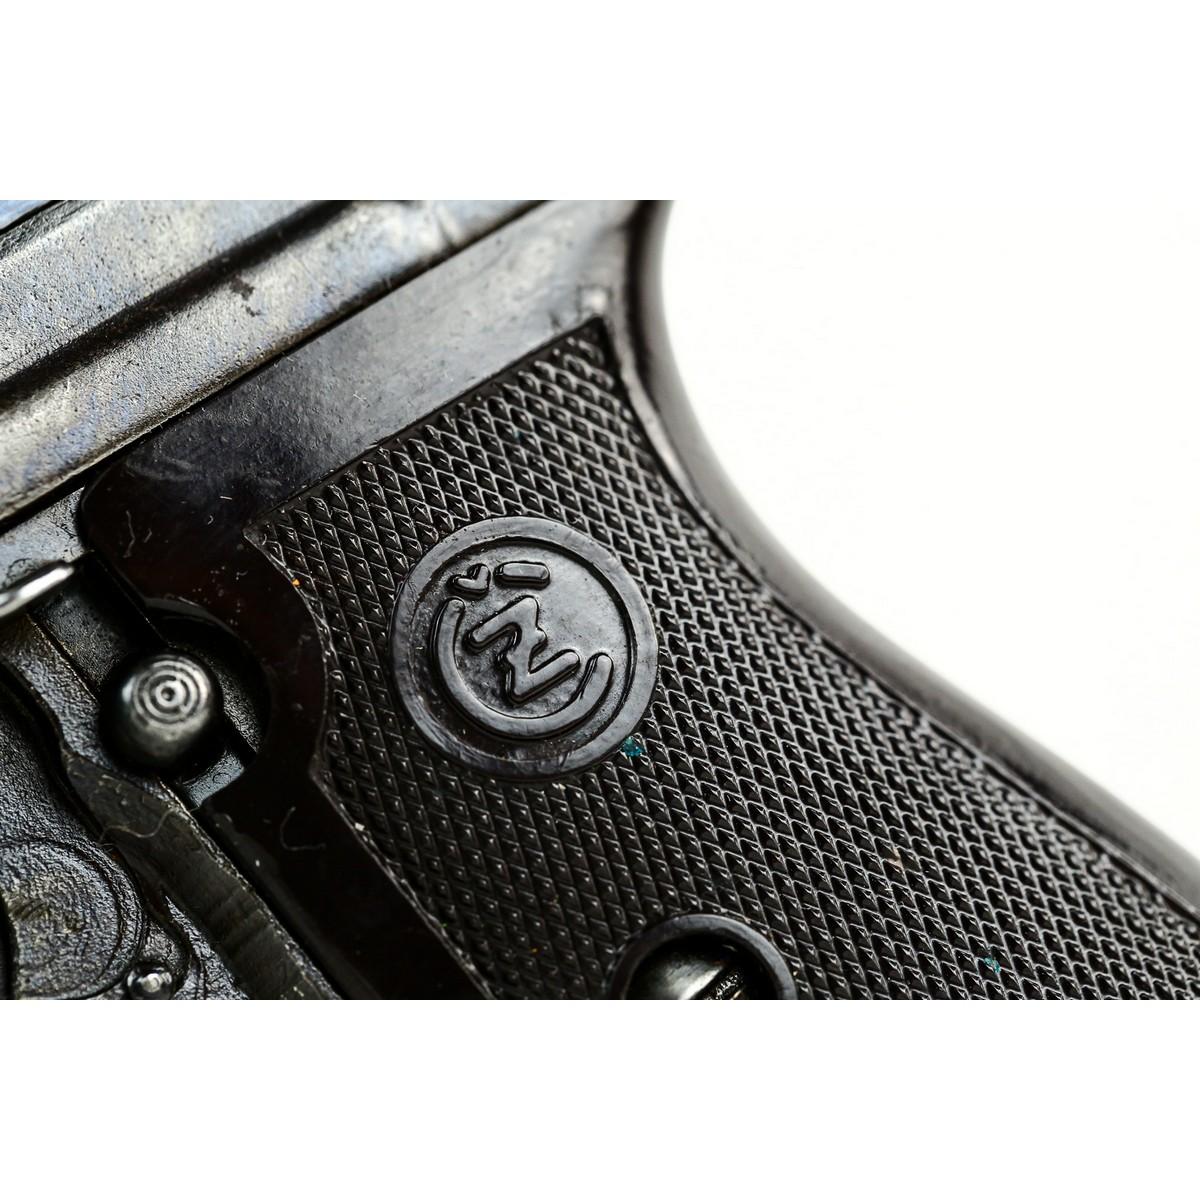 CZ-27 7.65mm/.32 ACP Pistol